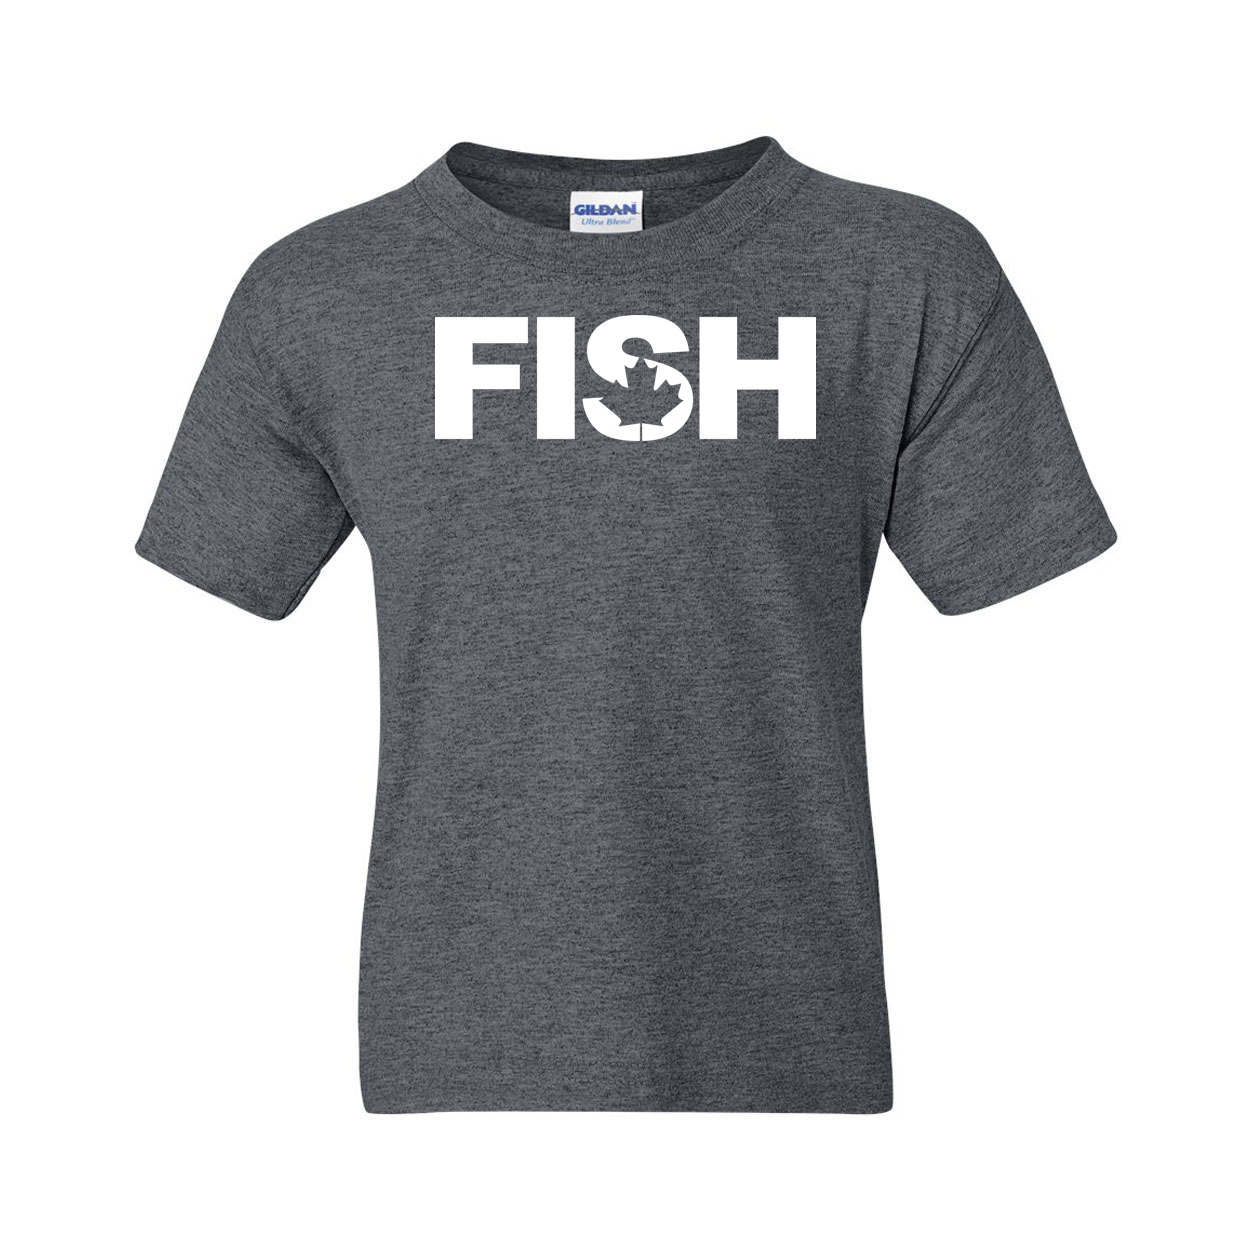 Fish Canada Classic Youth T-Shirt Dark Heather Gray (White Logo)